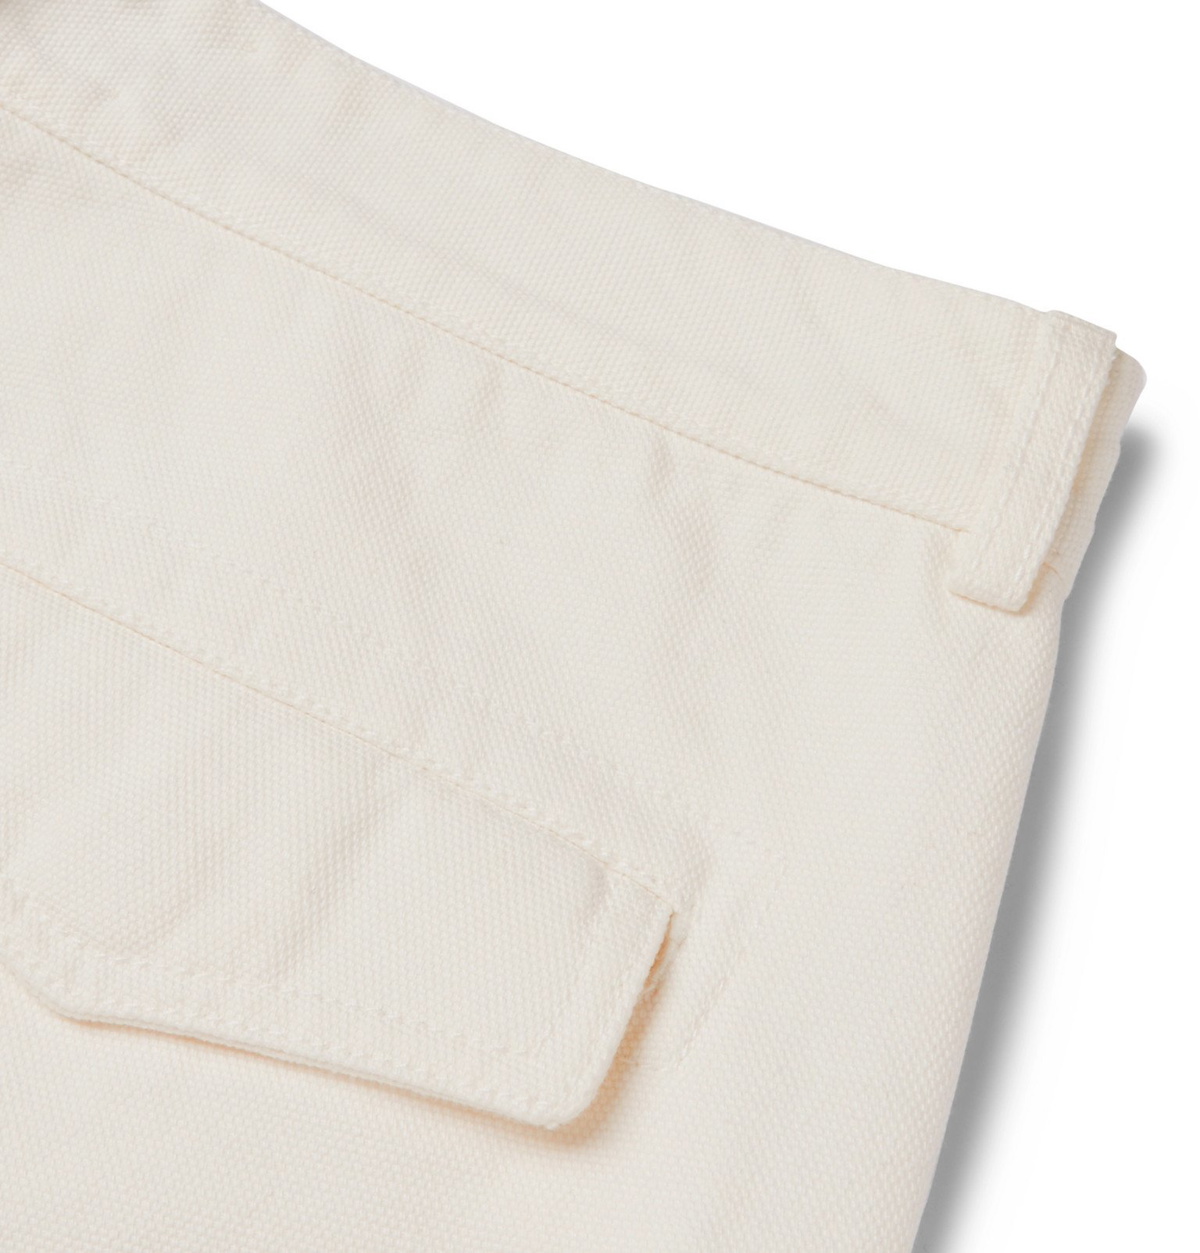 H & M - Cotton canvas cargo trousers - Beige, Compare